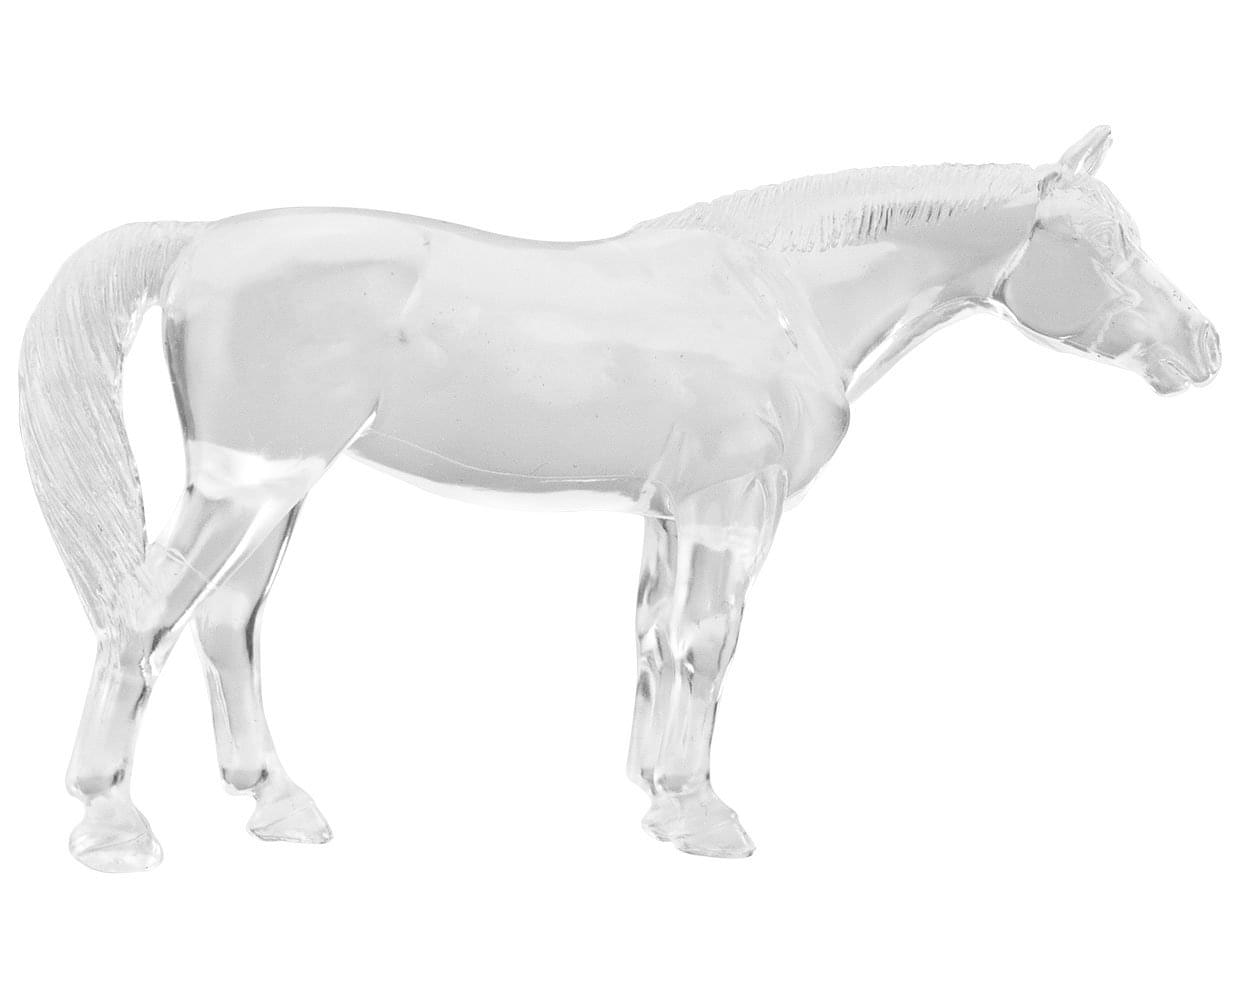 Breyer Suncatcher Horse Paint & Play DIY Set | Quarter Horse